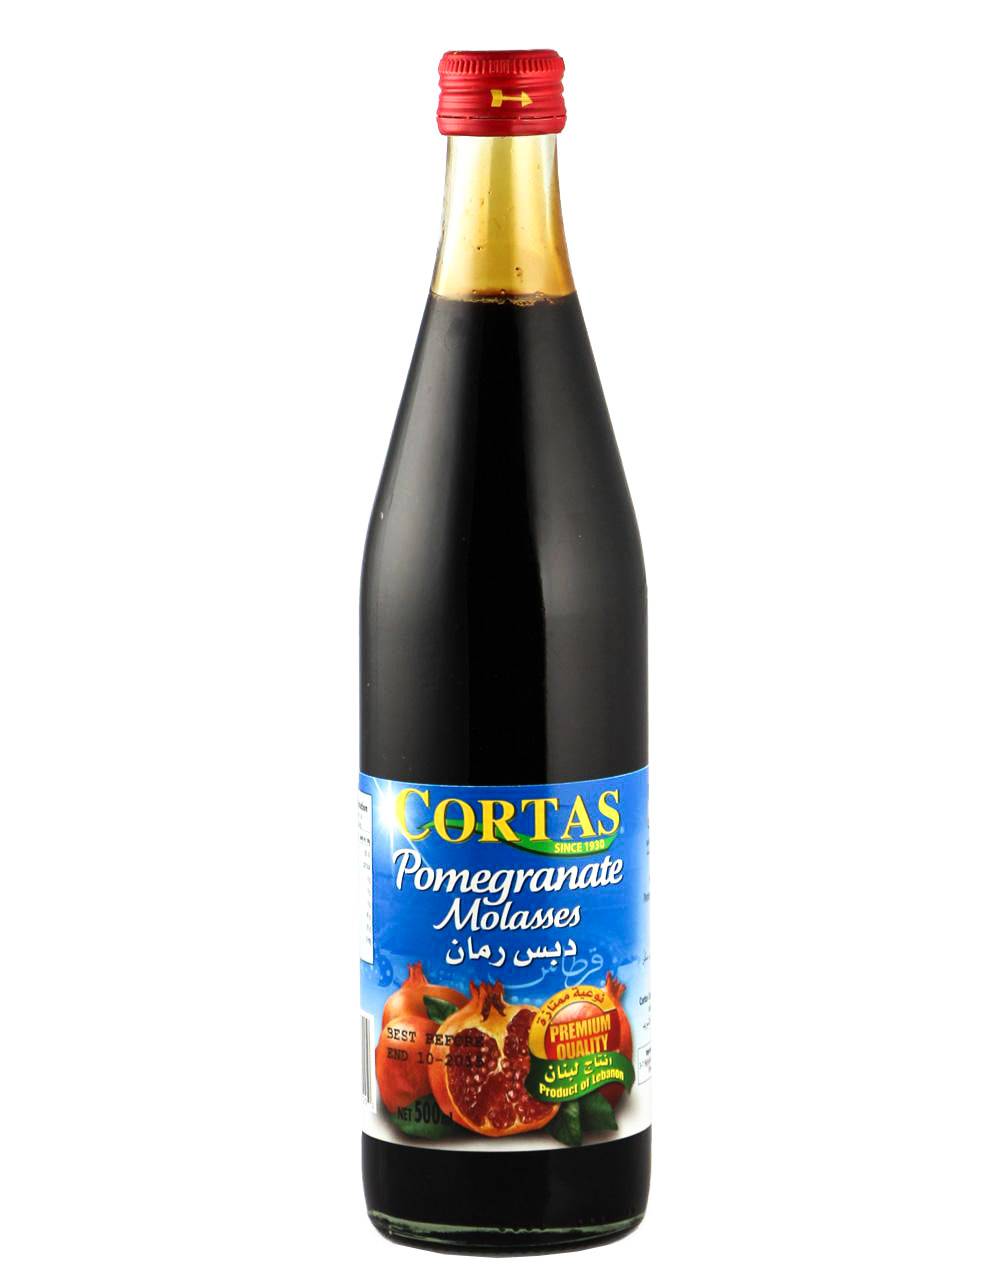 CORTAS Pomegranate Molasses - Dibs Rumman, 17 oz.